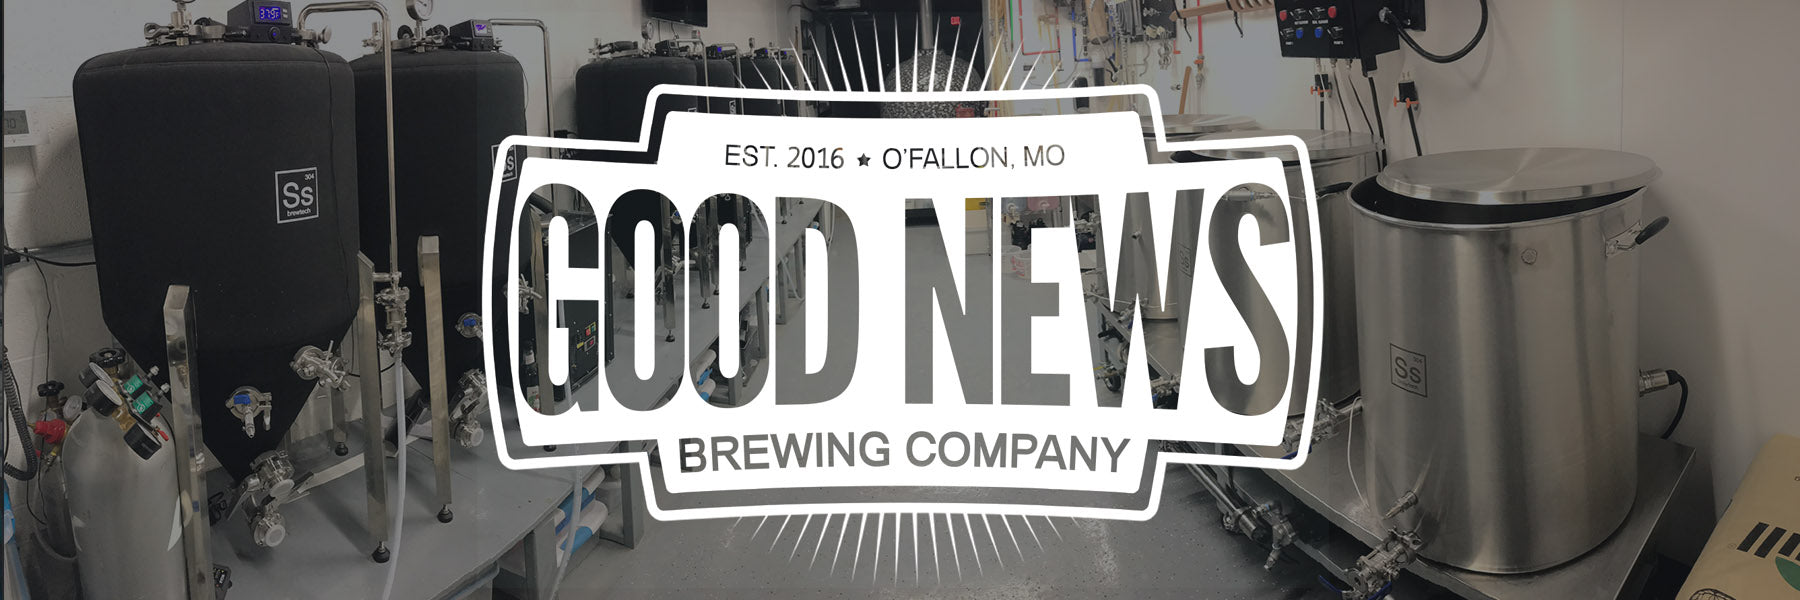 Good News Brewing | Ofallon, Missouri